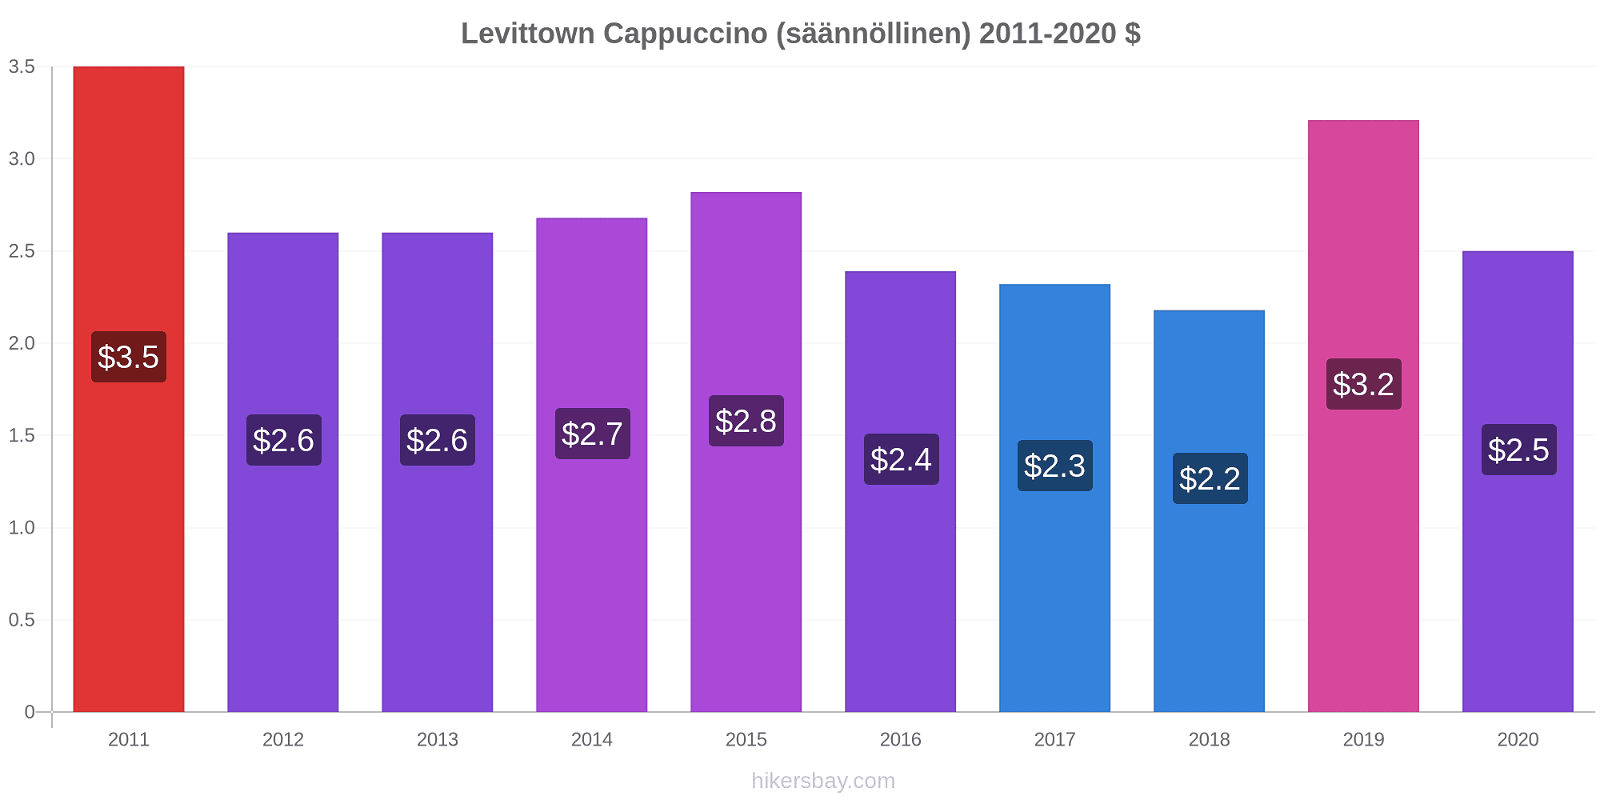 Levittown hintojen muutokset Cappuccino (säännöllinen) hikersbay.com